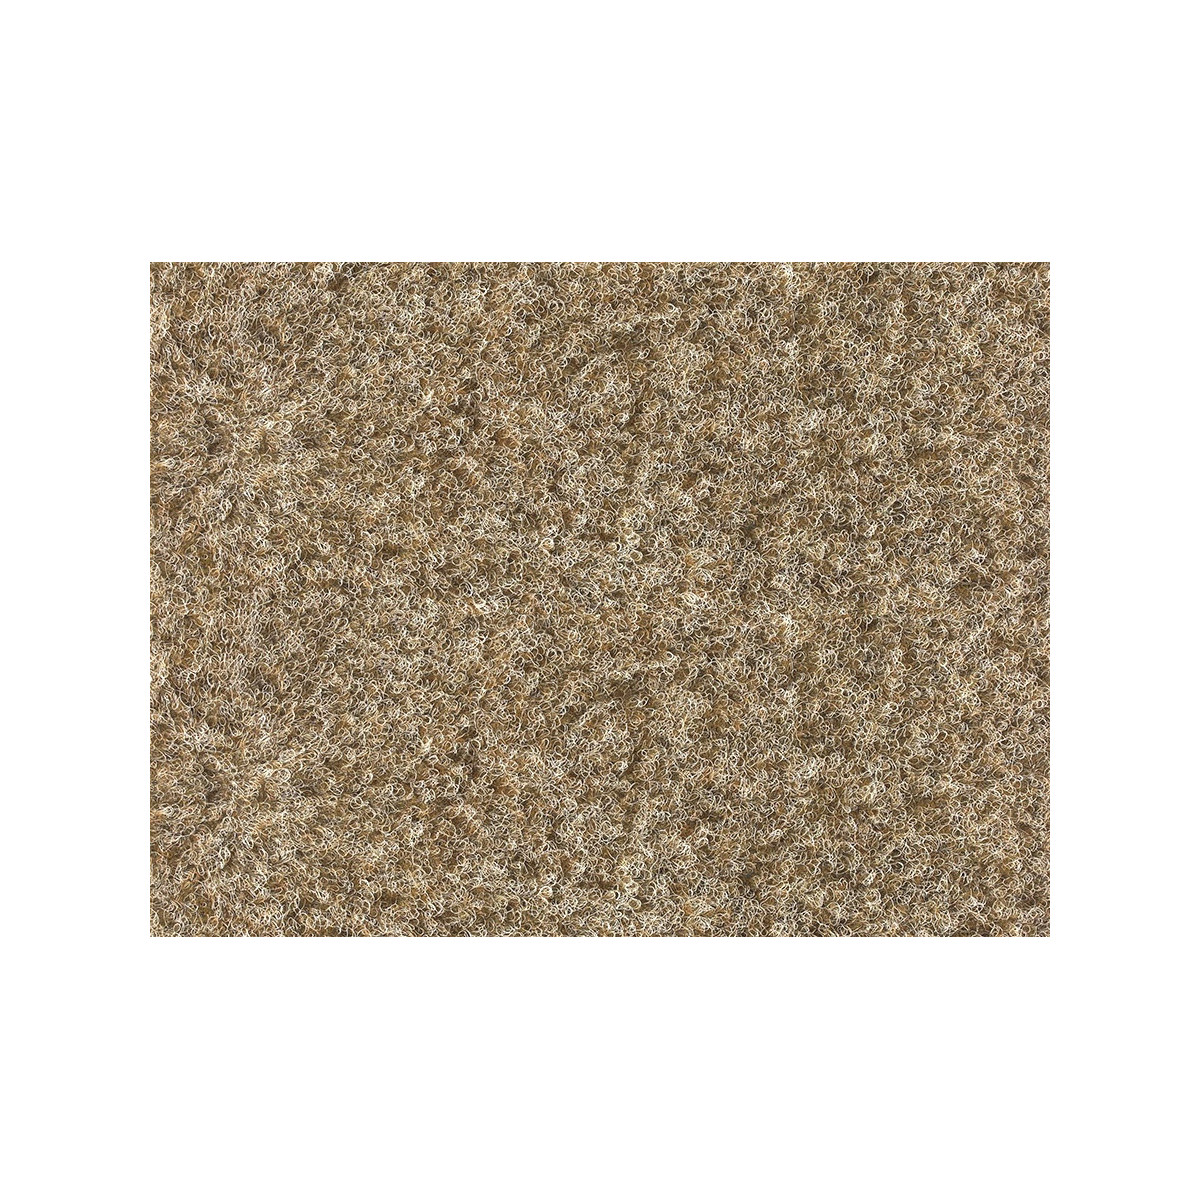 AKCE: 100x400 cm Metrážový koberec Santana béžová s podkladem gel, zátěžový